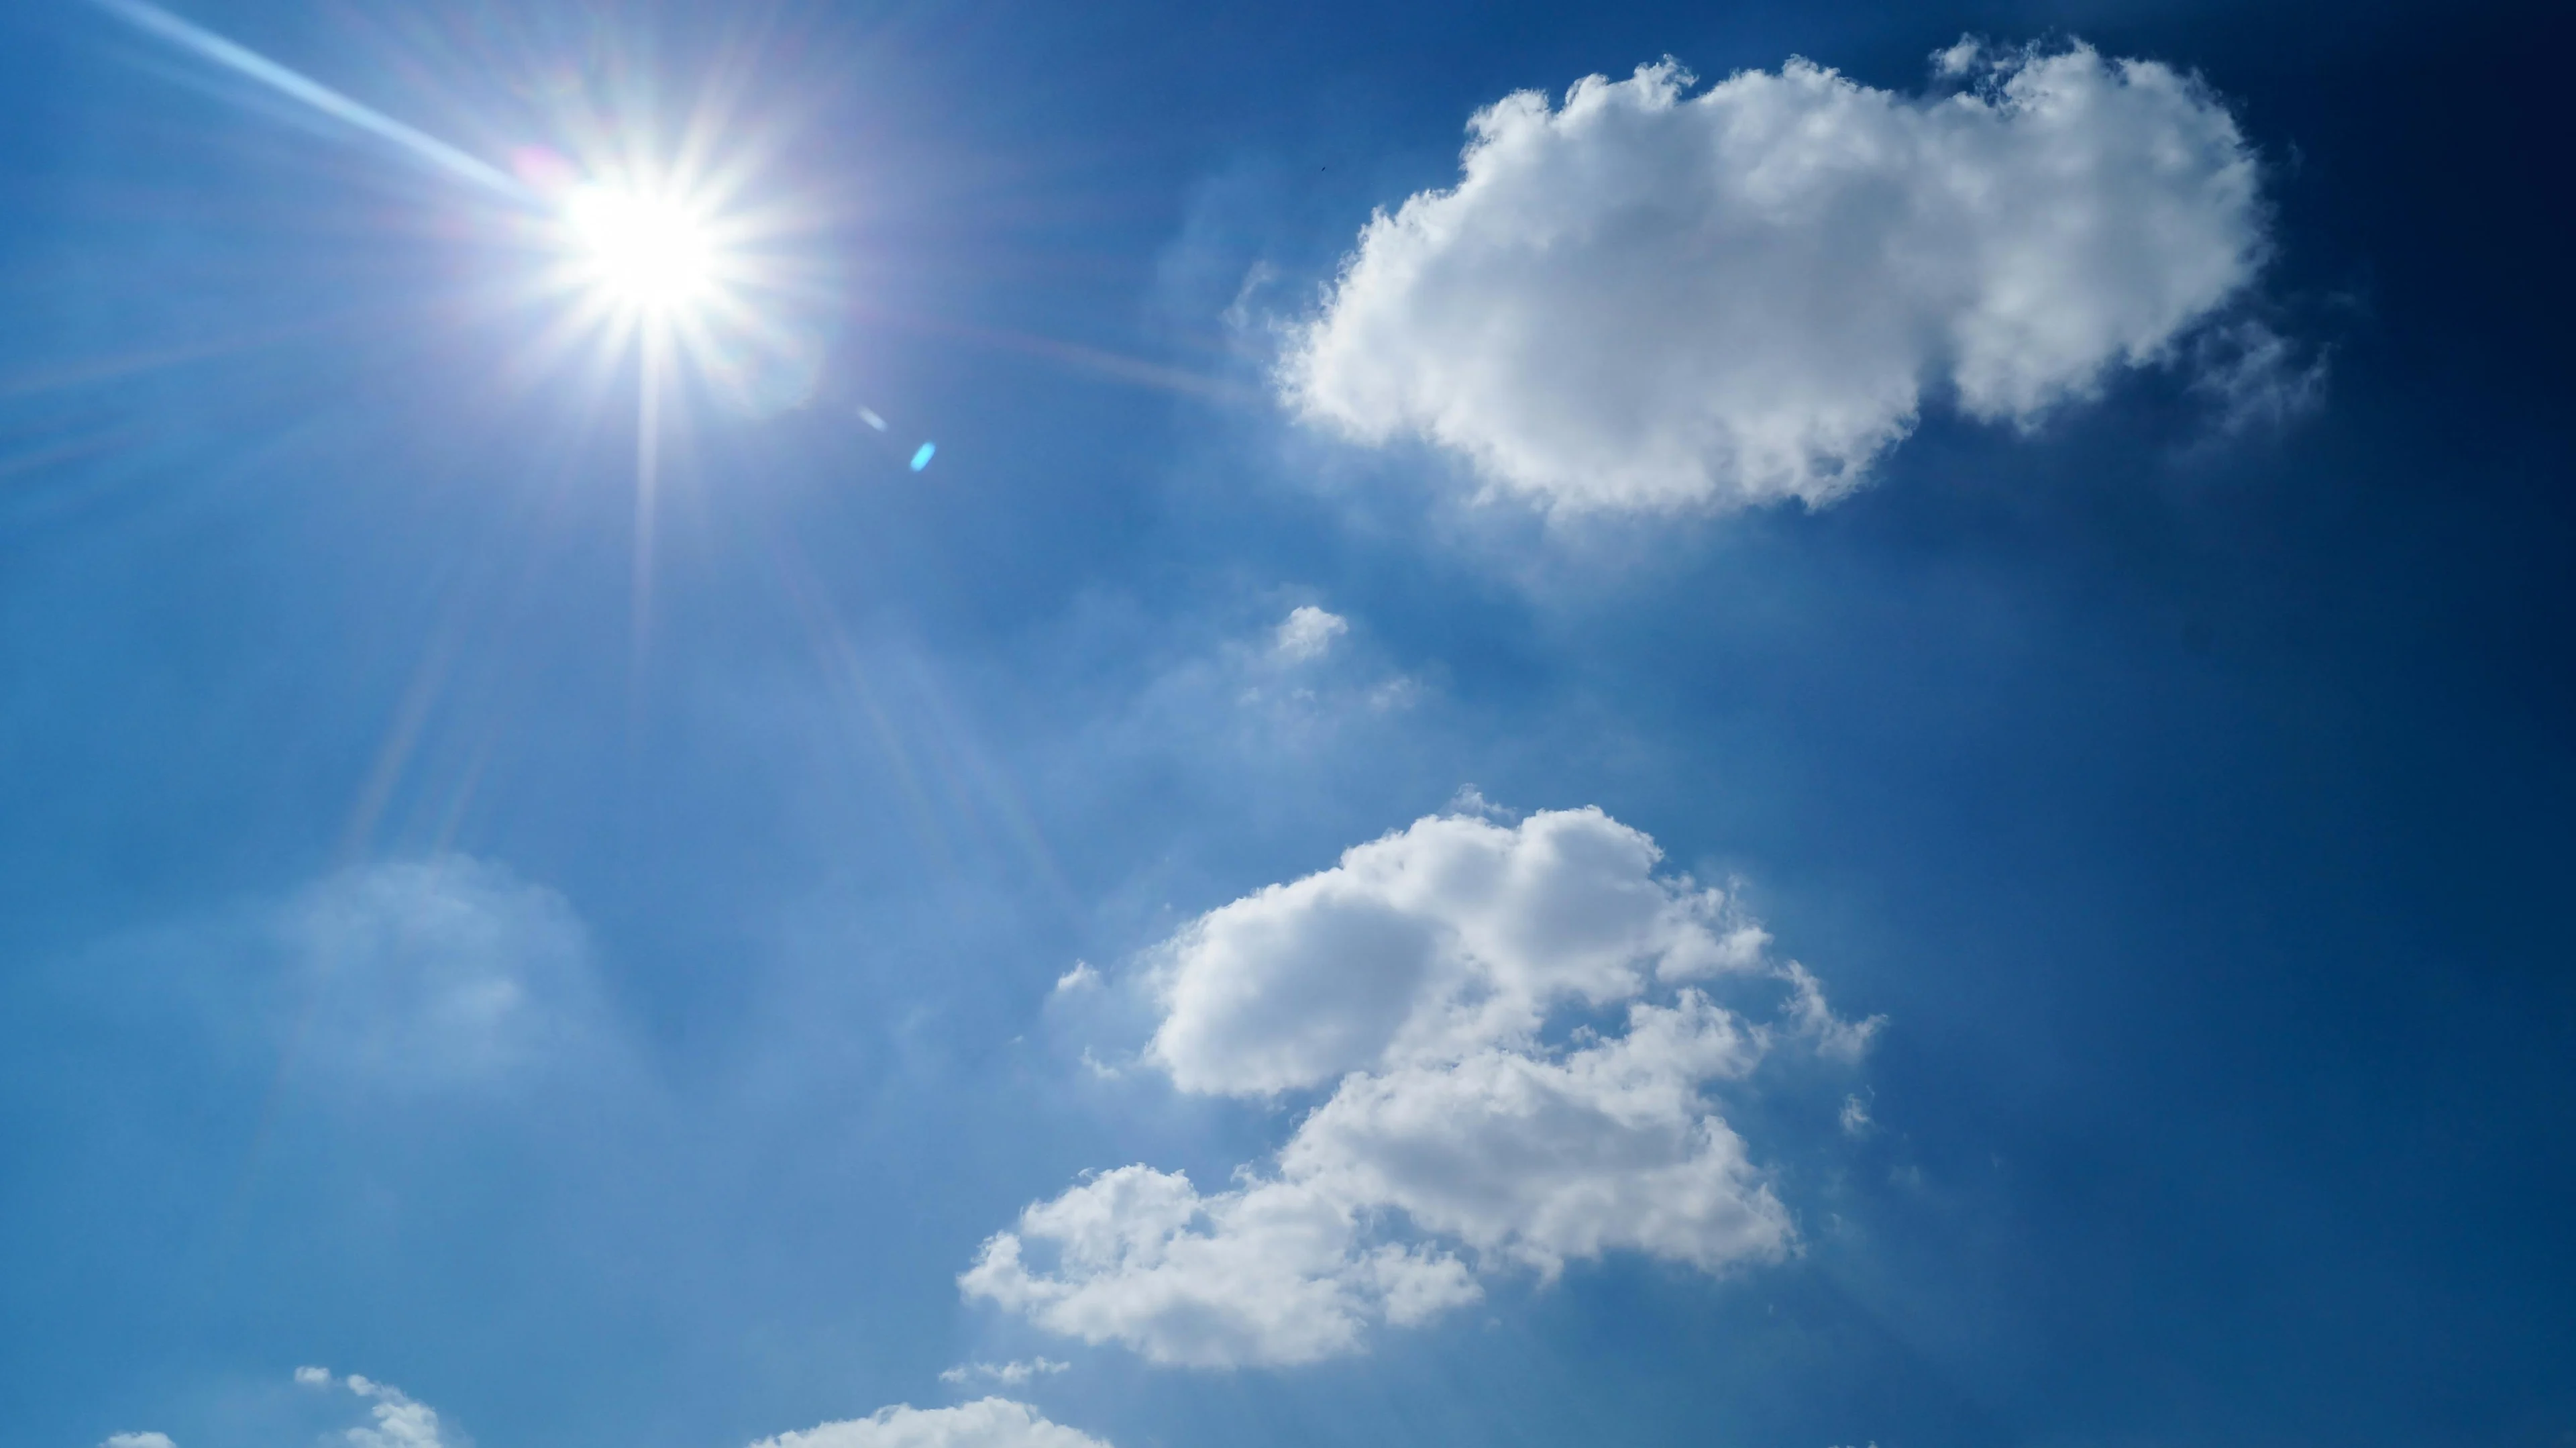 Niagara Falls' weather forecast: Mix of sun and clouds